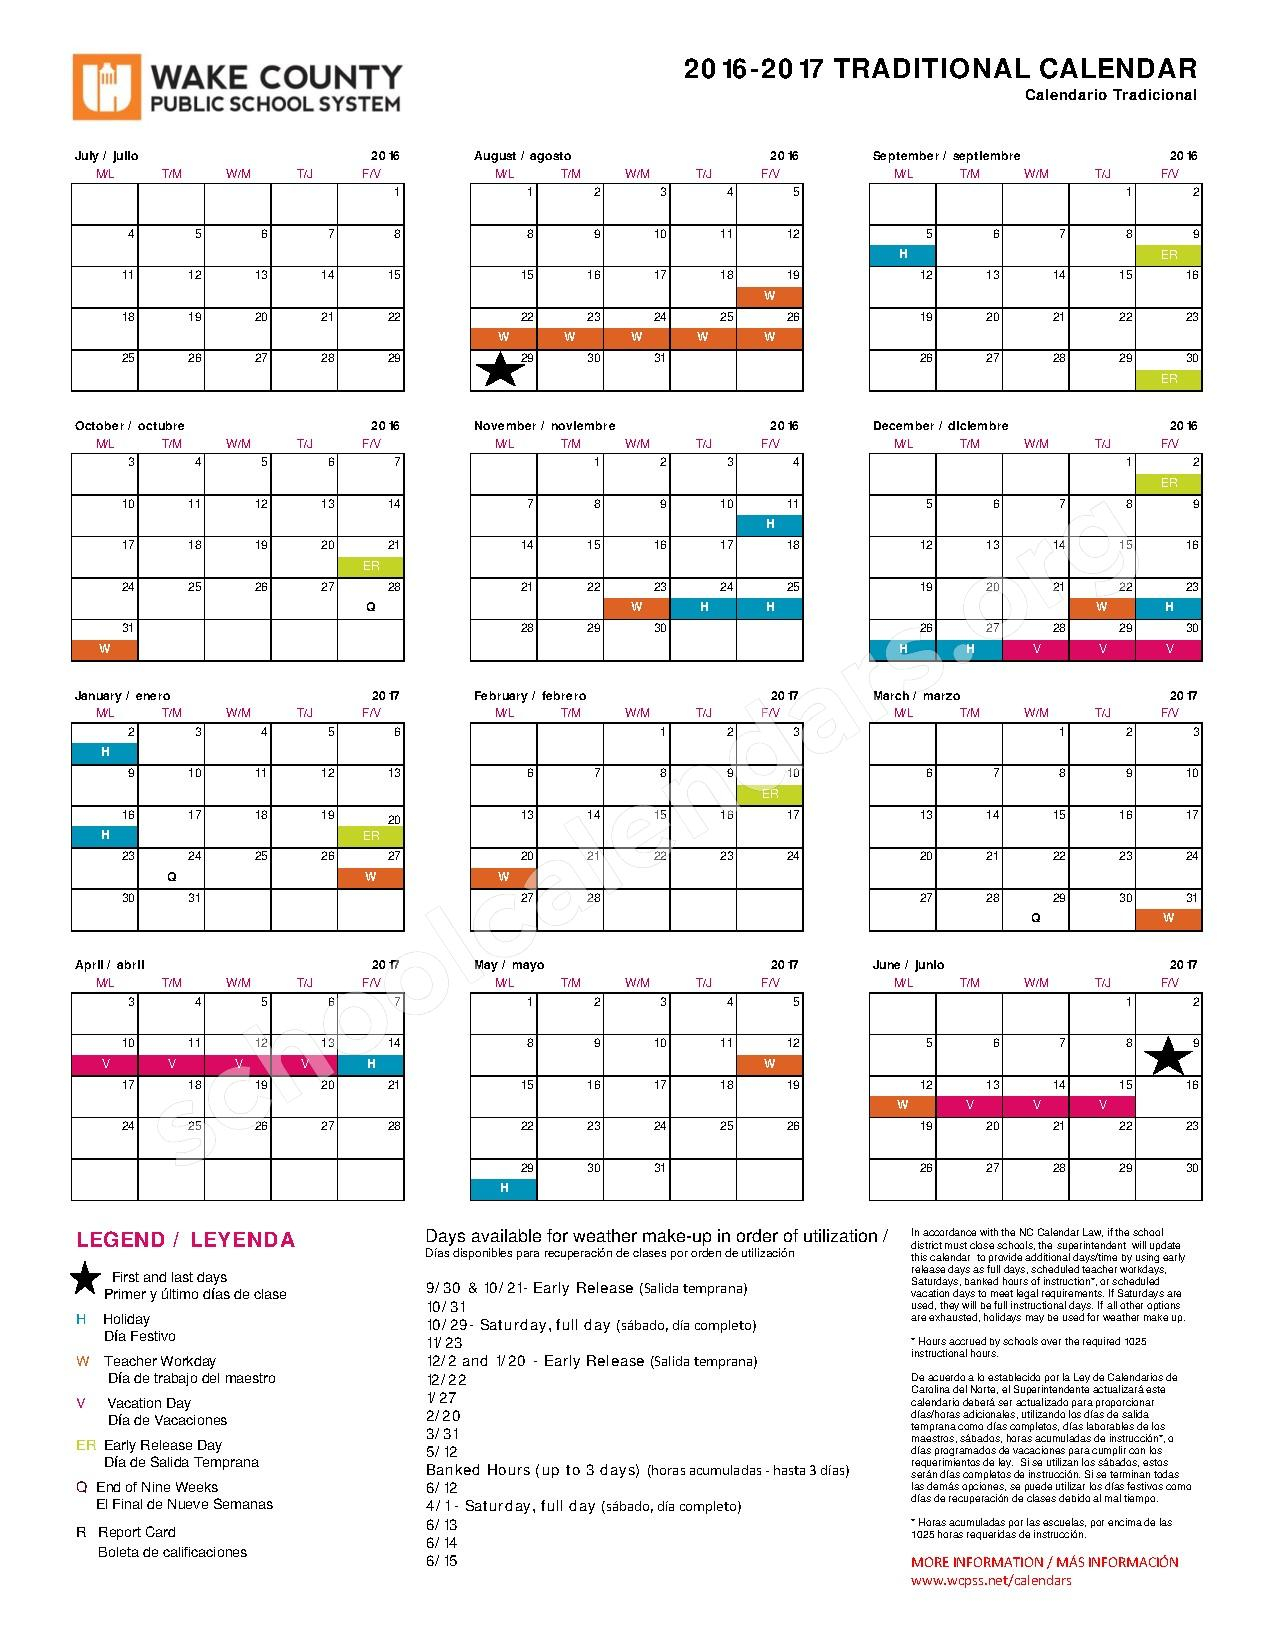 Traditional Wake County Calendar CountyCalendars net